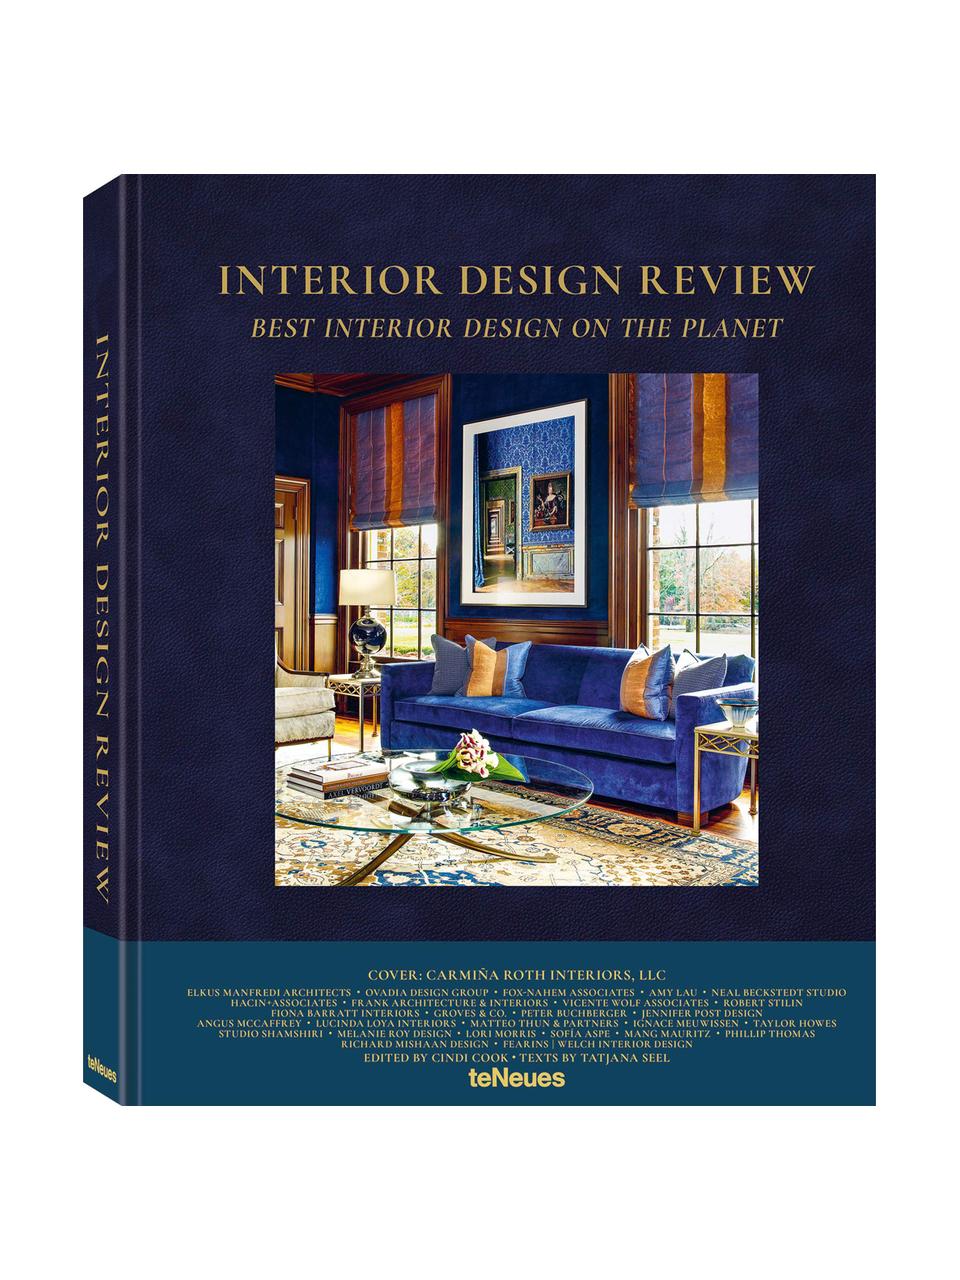 Libro ilustrado Interior Design Review, Papel, tapa dura, Multicolor, L 32 x An 25 cm